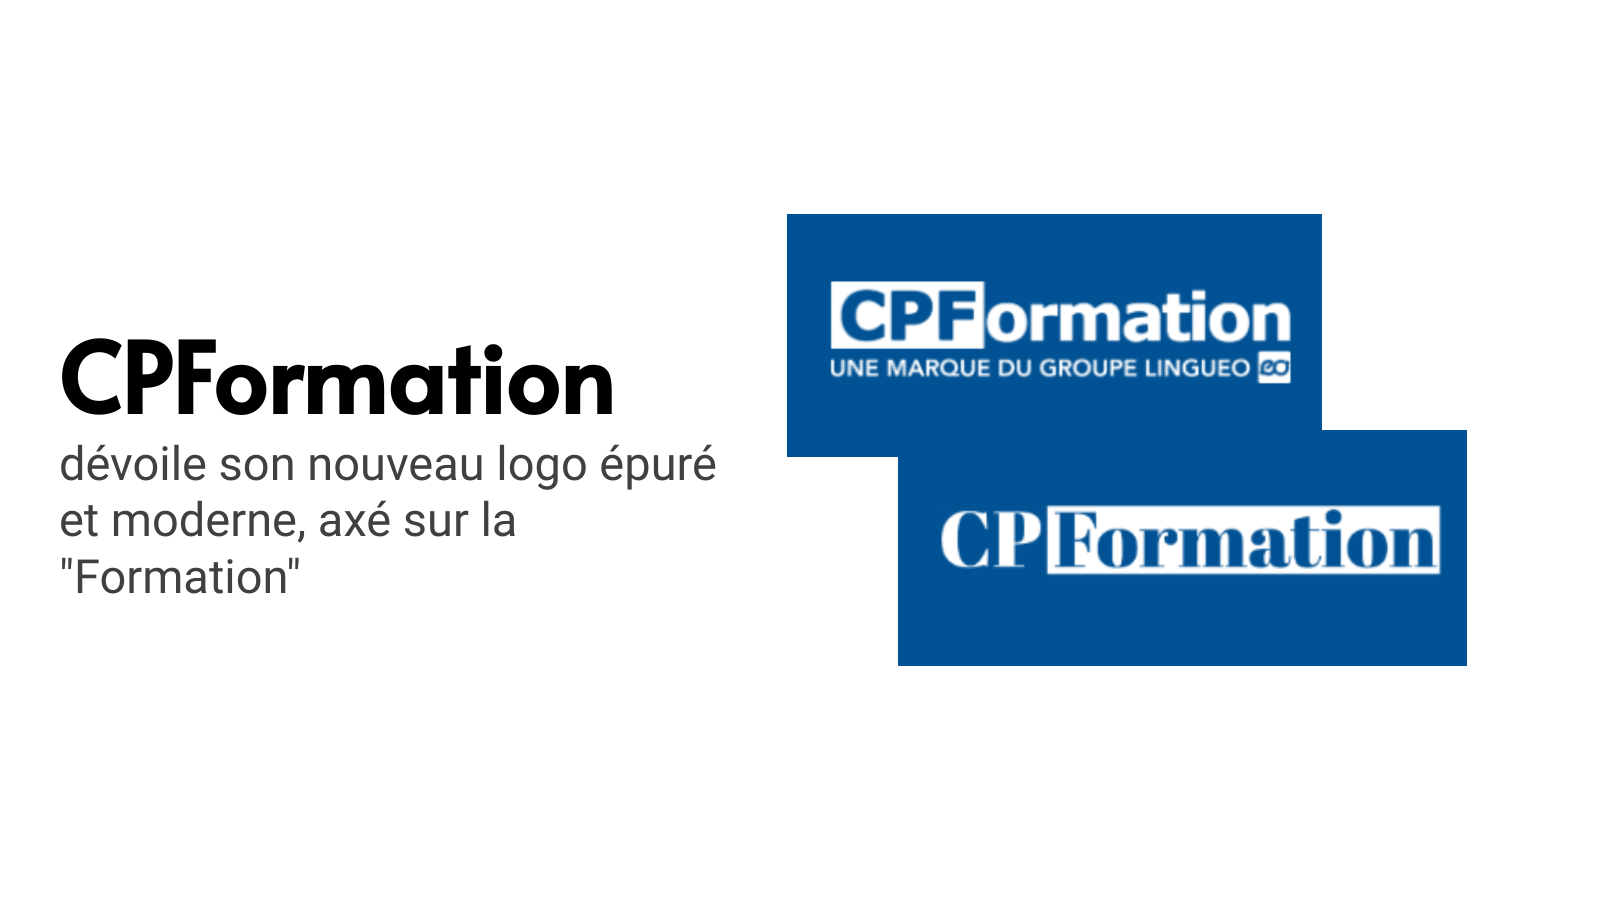 CPFormation s’adapte et se reforme